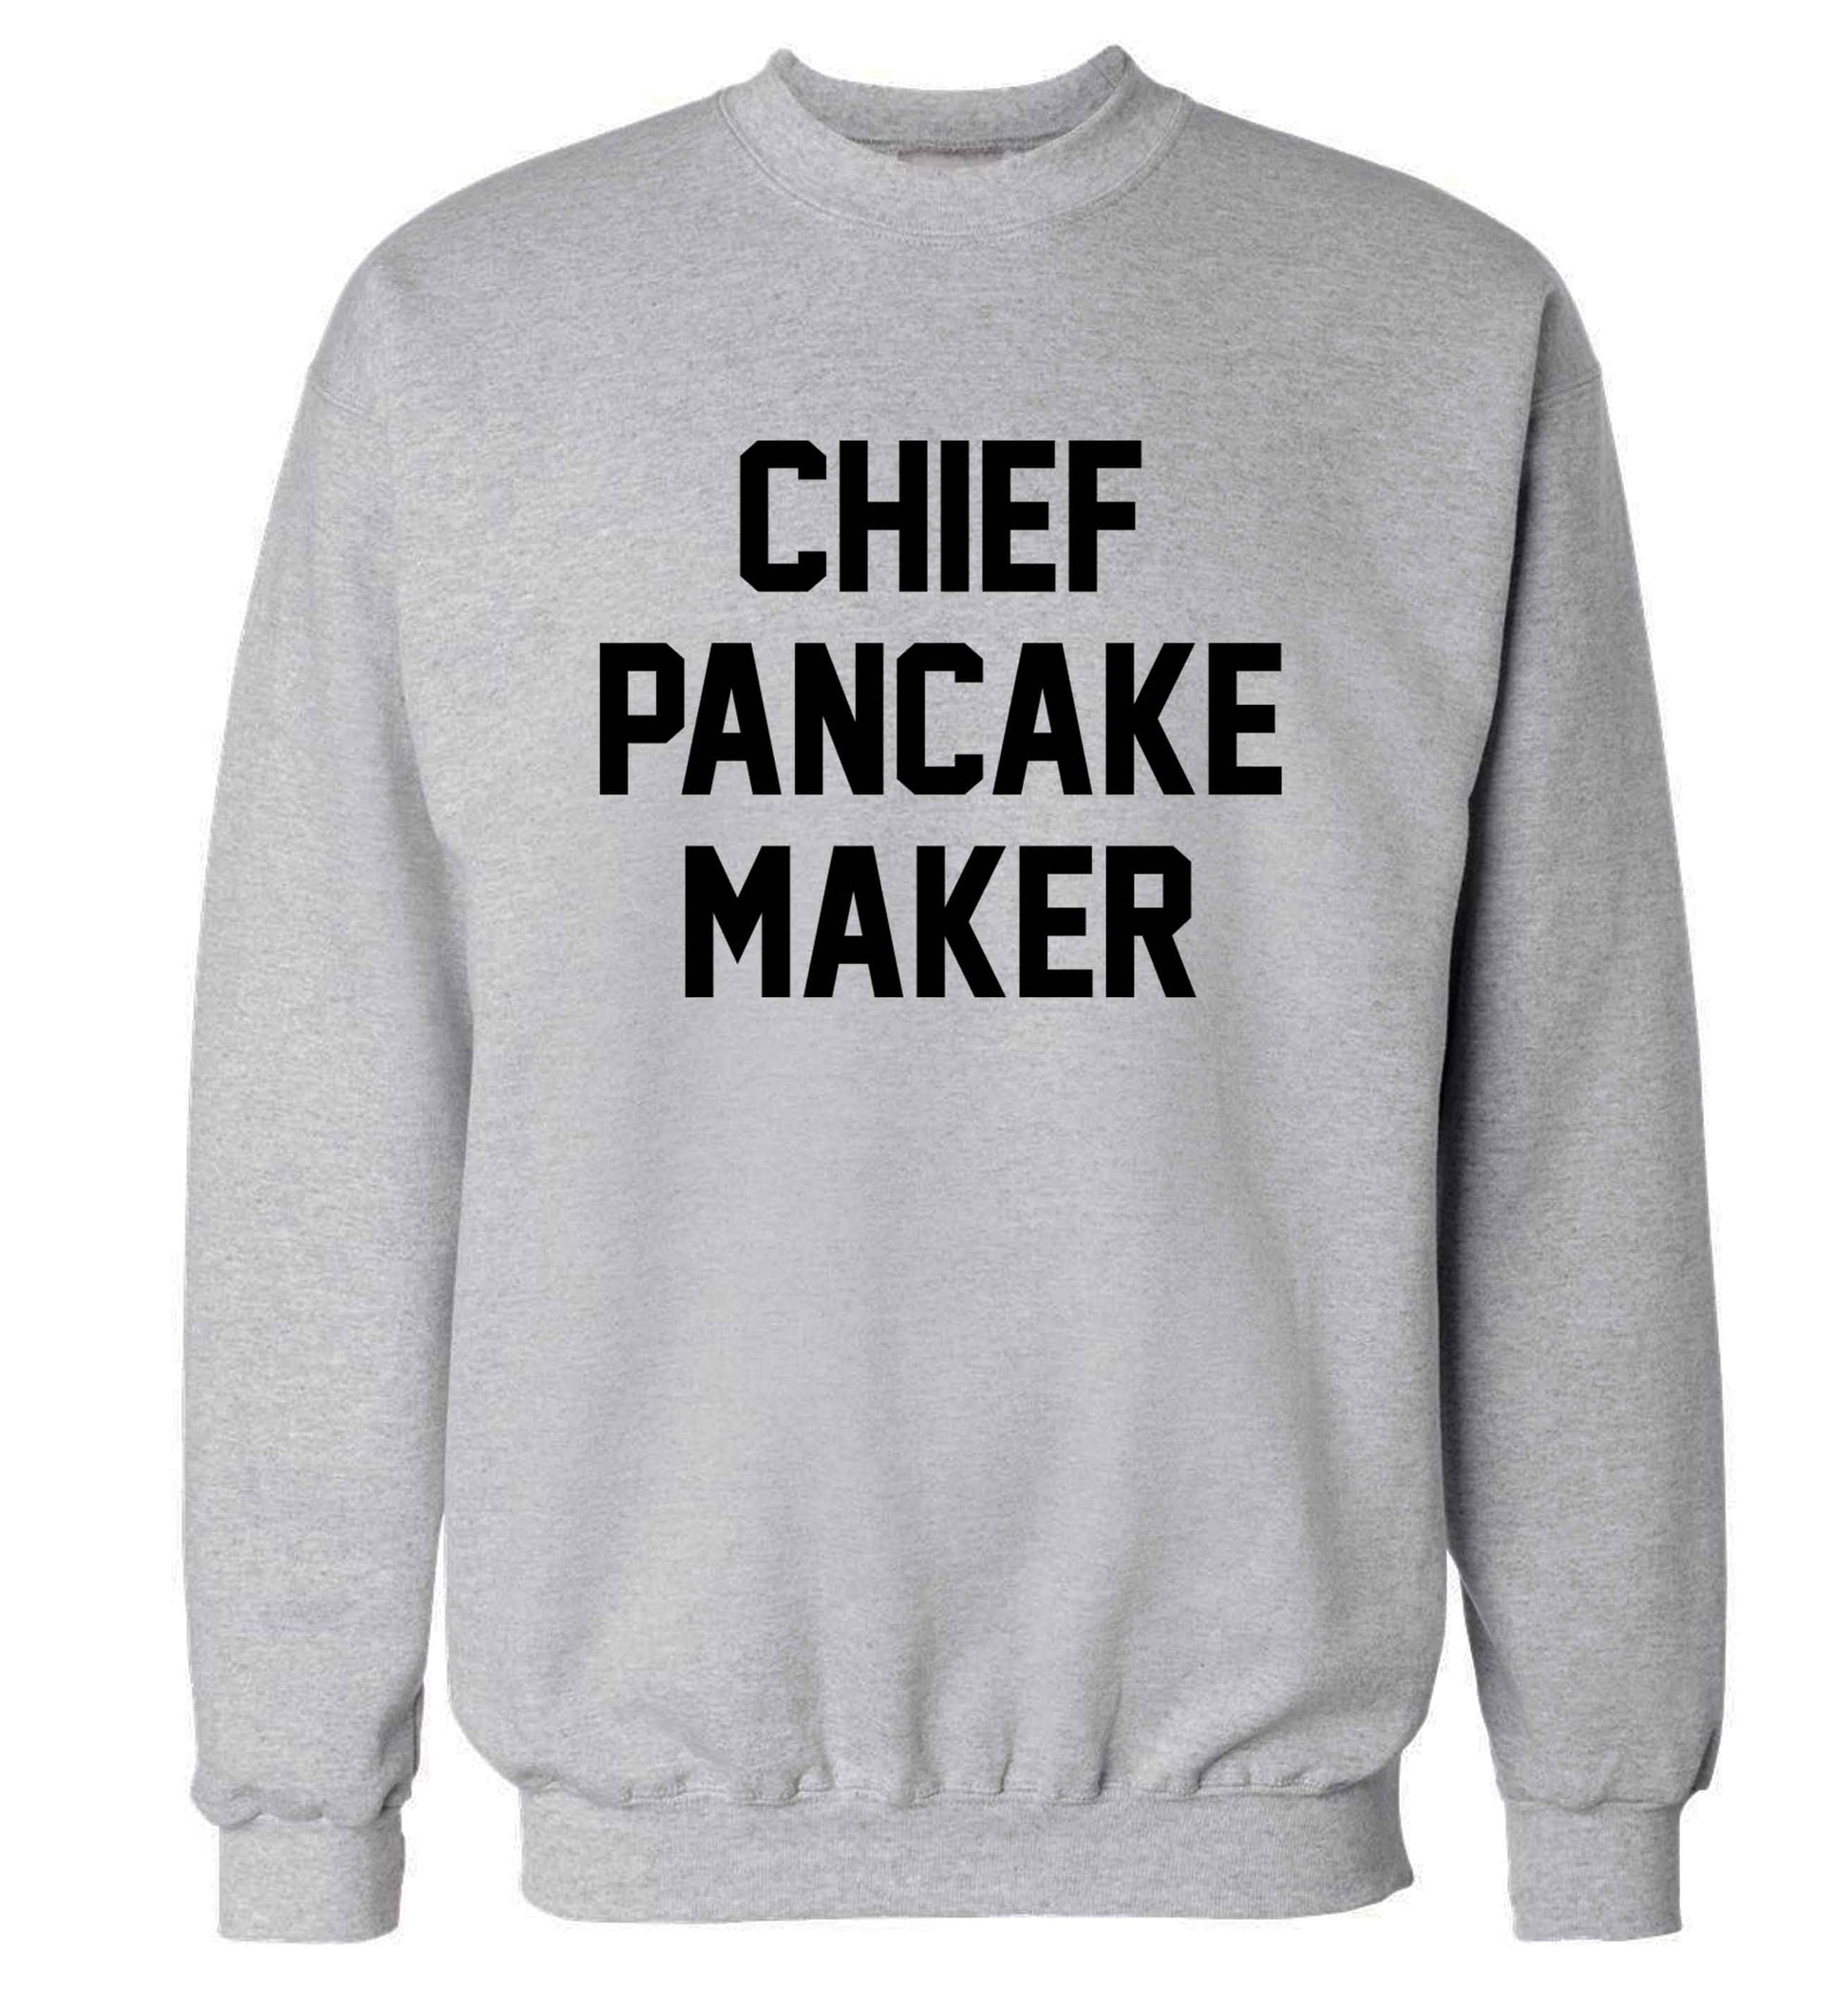 Chief pancake maker adult's unisex grey sweater 2XL